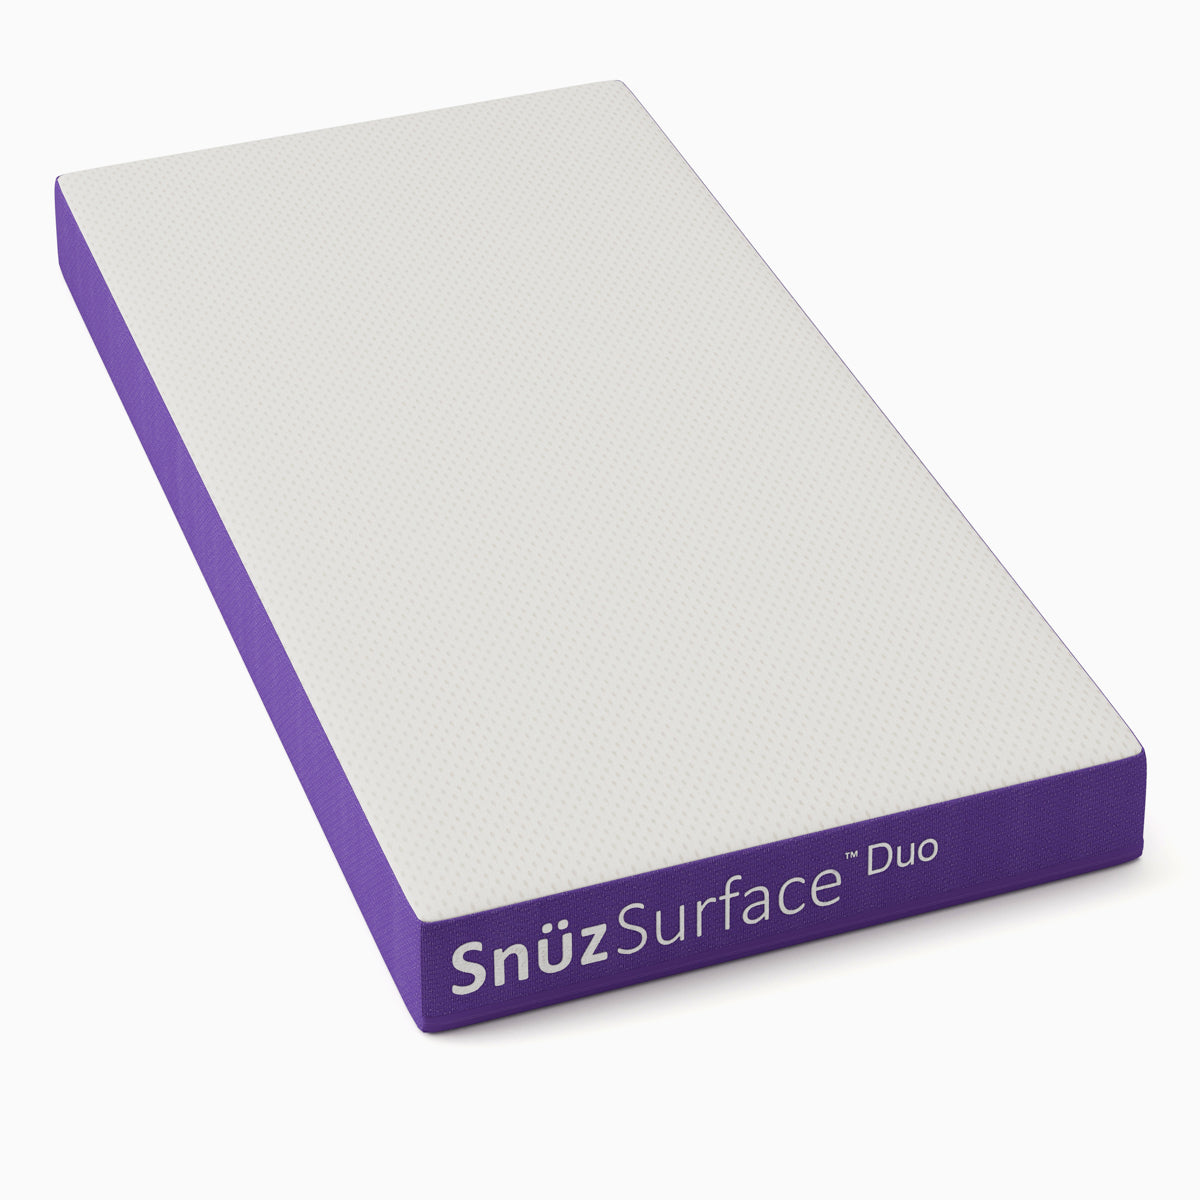 SnuzSurface Duo Mattress Cot Bed